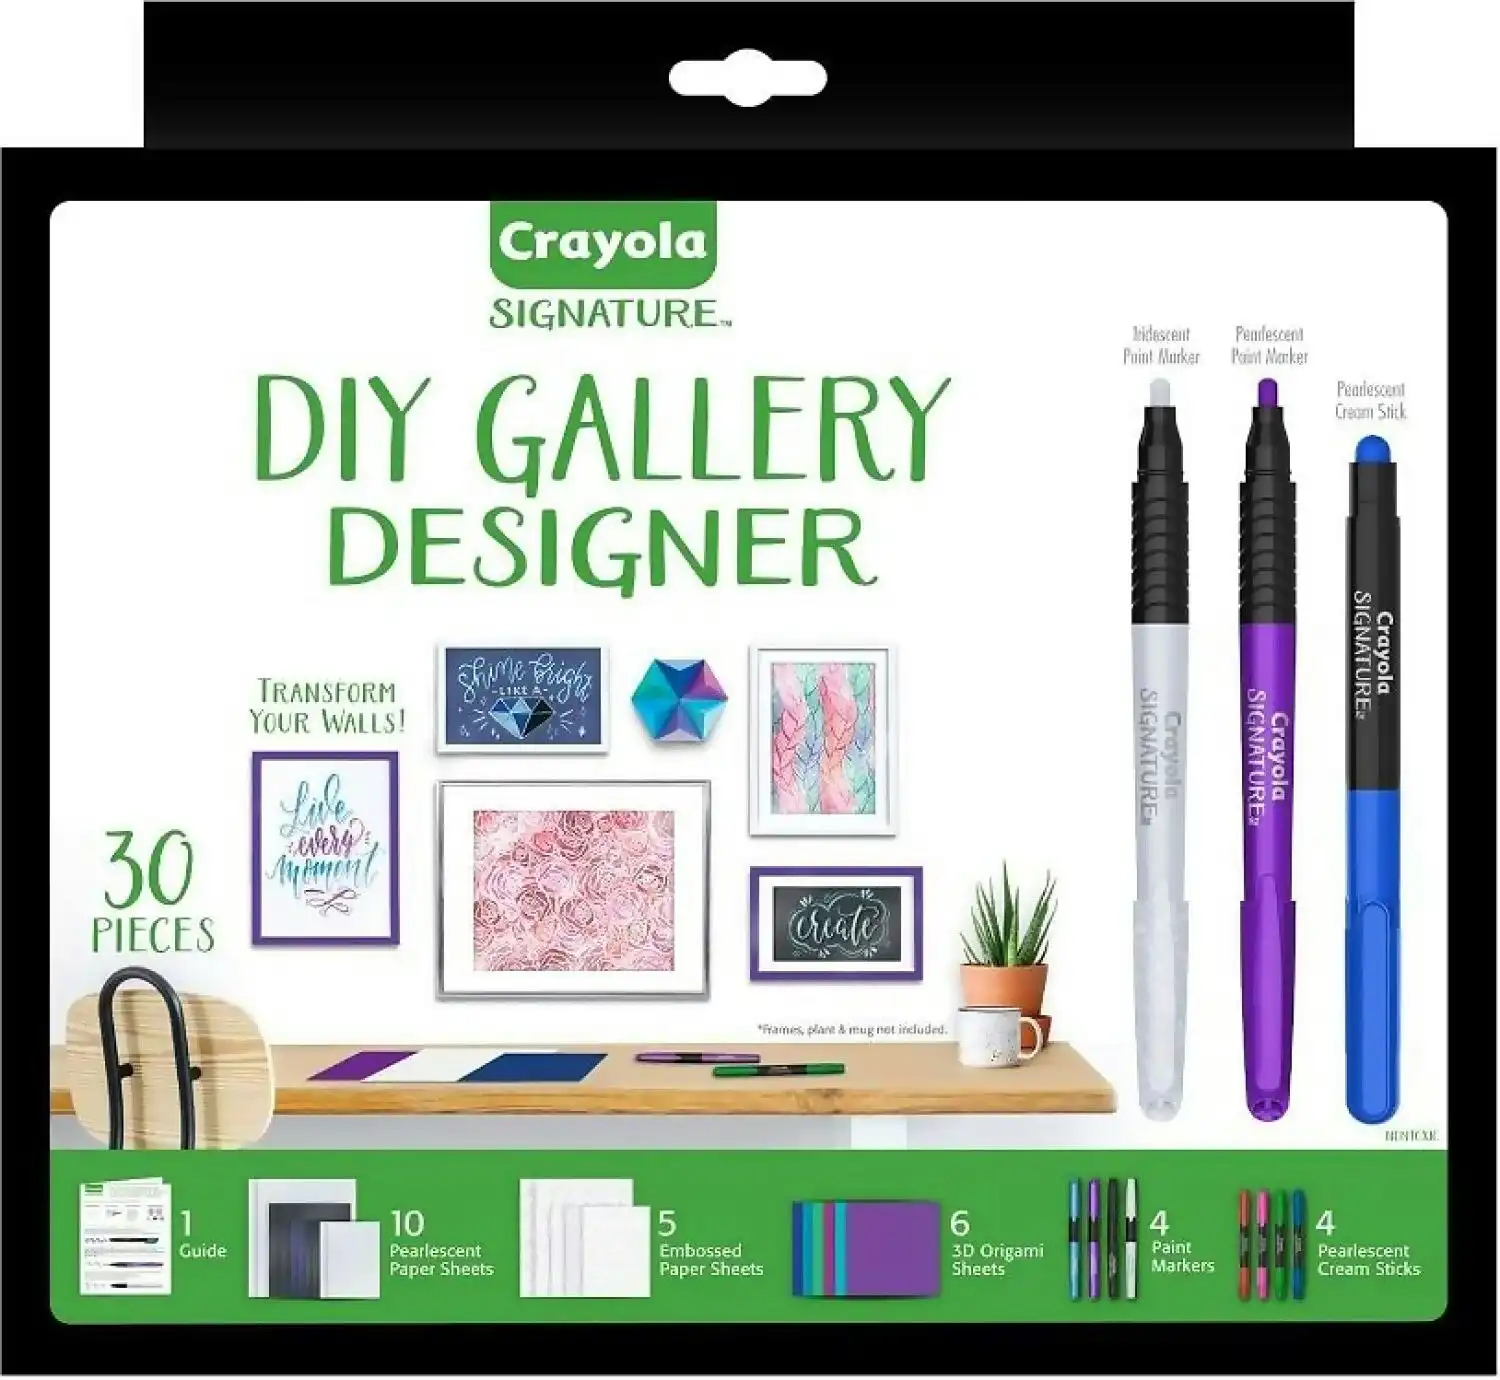 Crayola Signature - Diy Gallery Designer